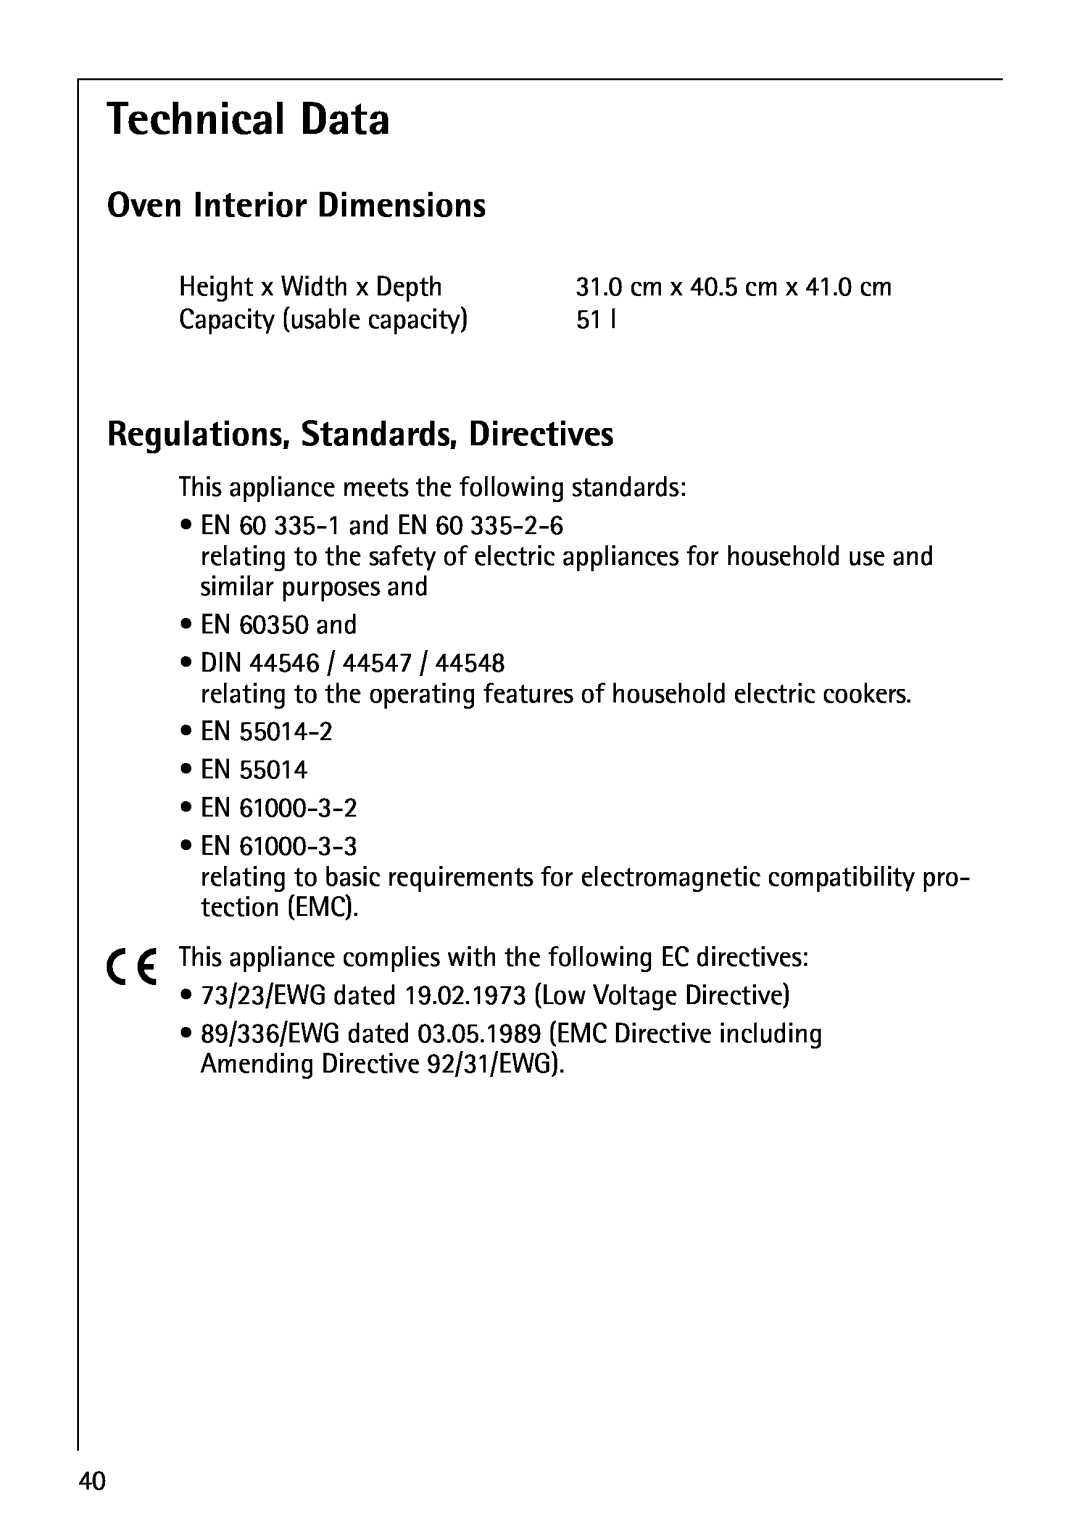 AEG E3000-1 manual Technical Data, Oven Interior Dimensions, Regulations, Standards, Directives 